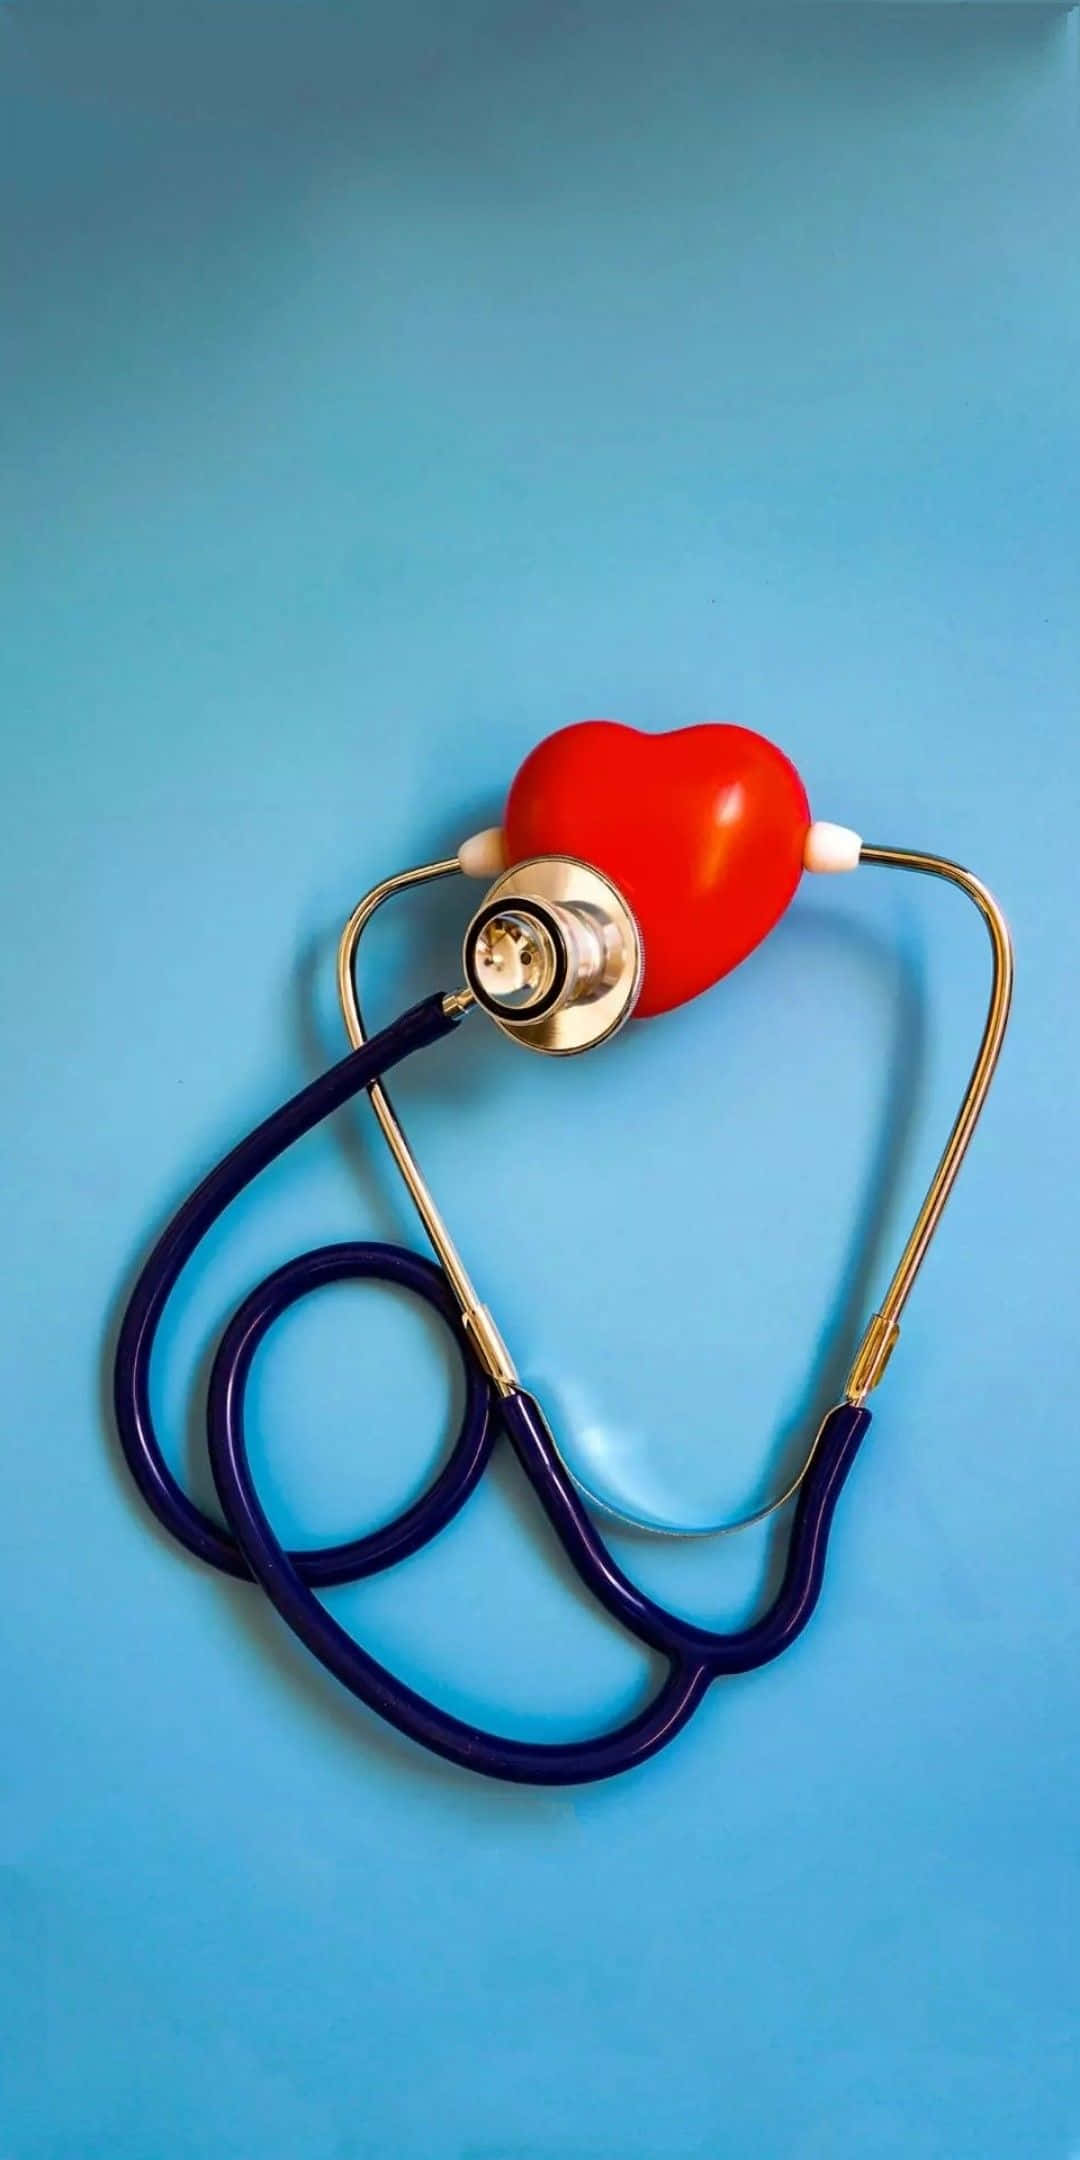 A Heart Shaped Stethoscope On A Blue Background